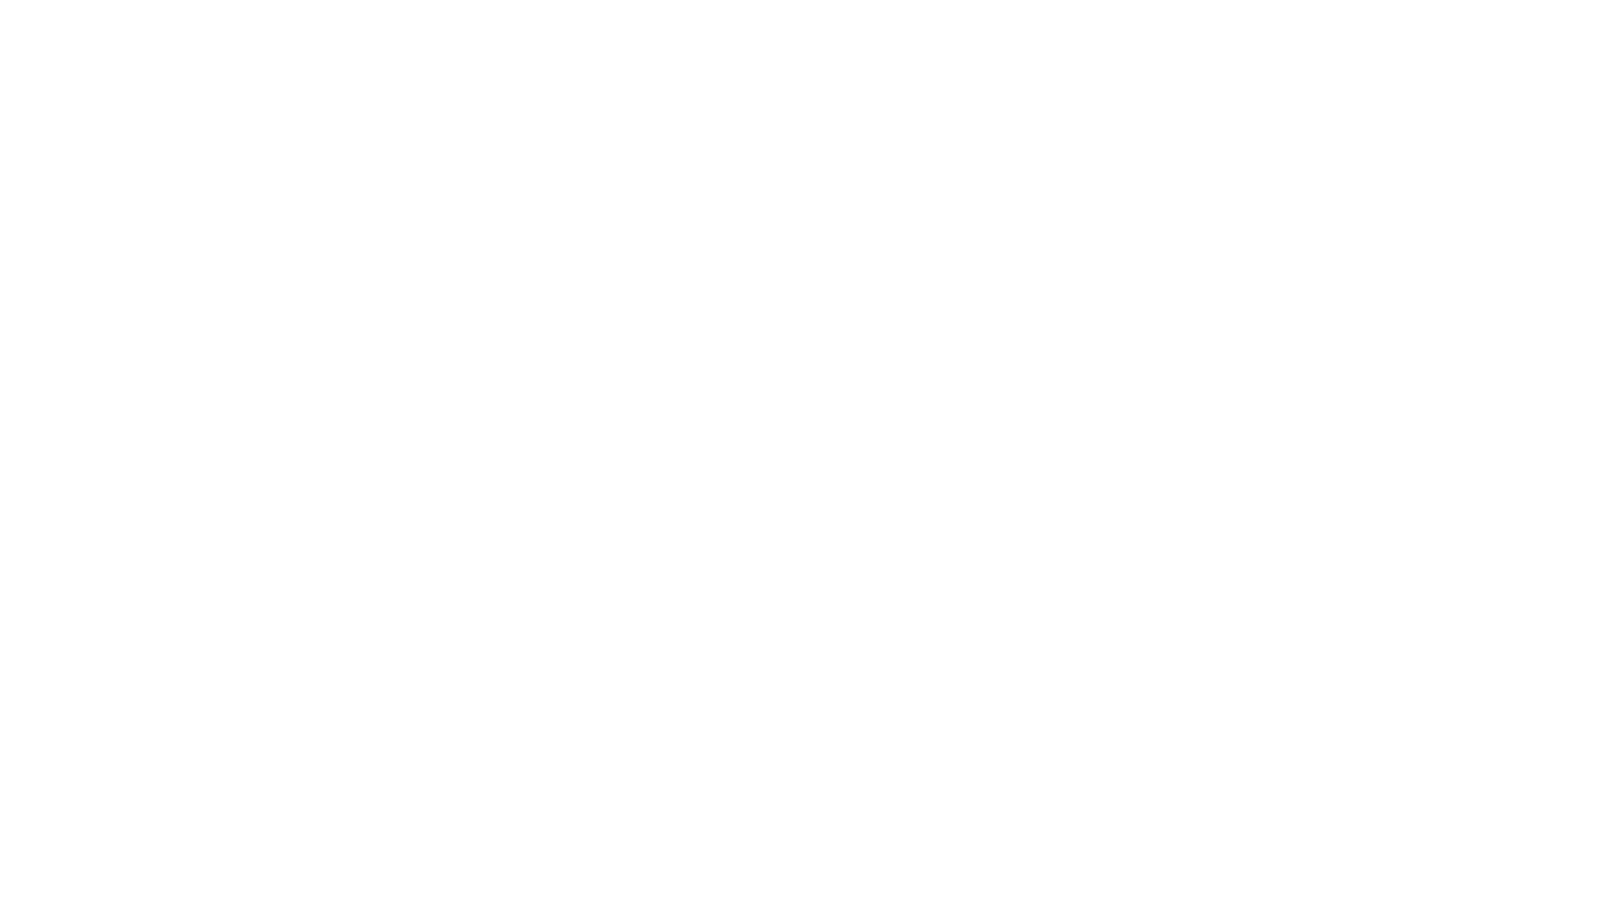 MOHSIN KHAN DESIGN